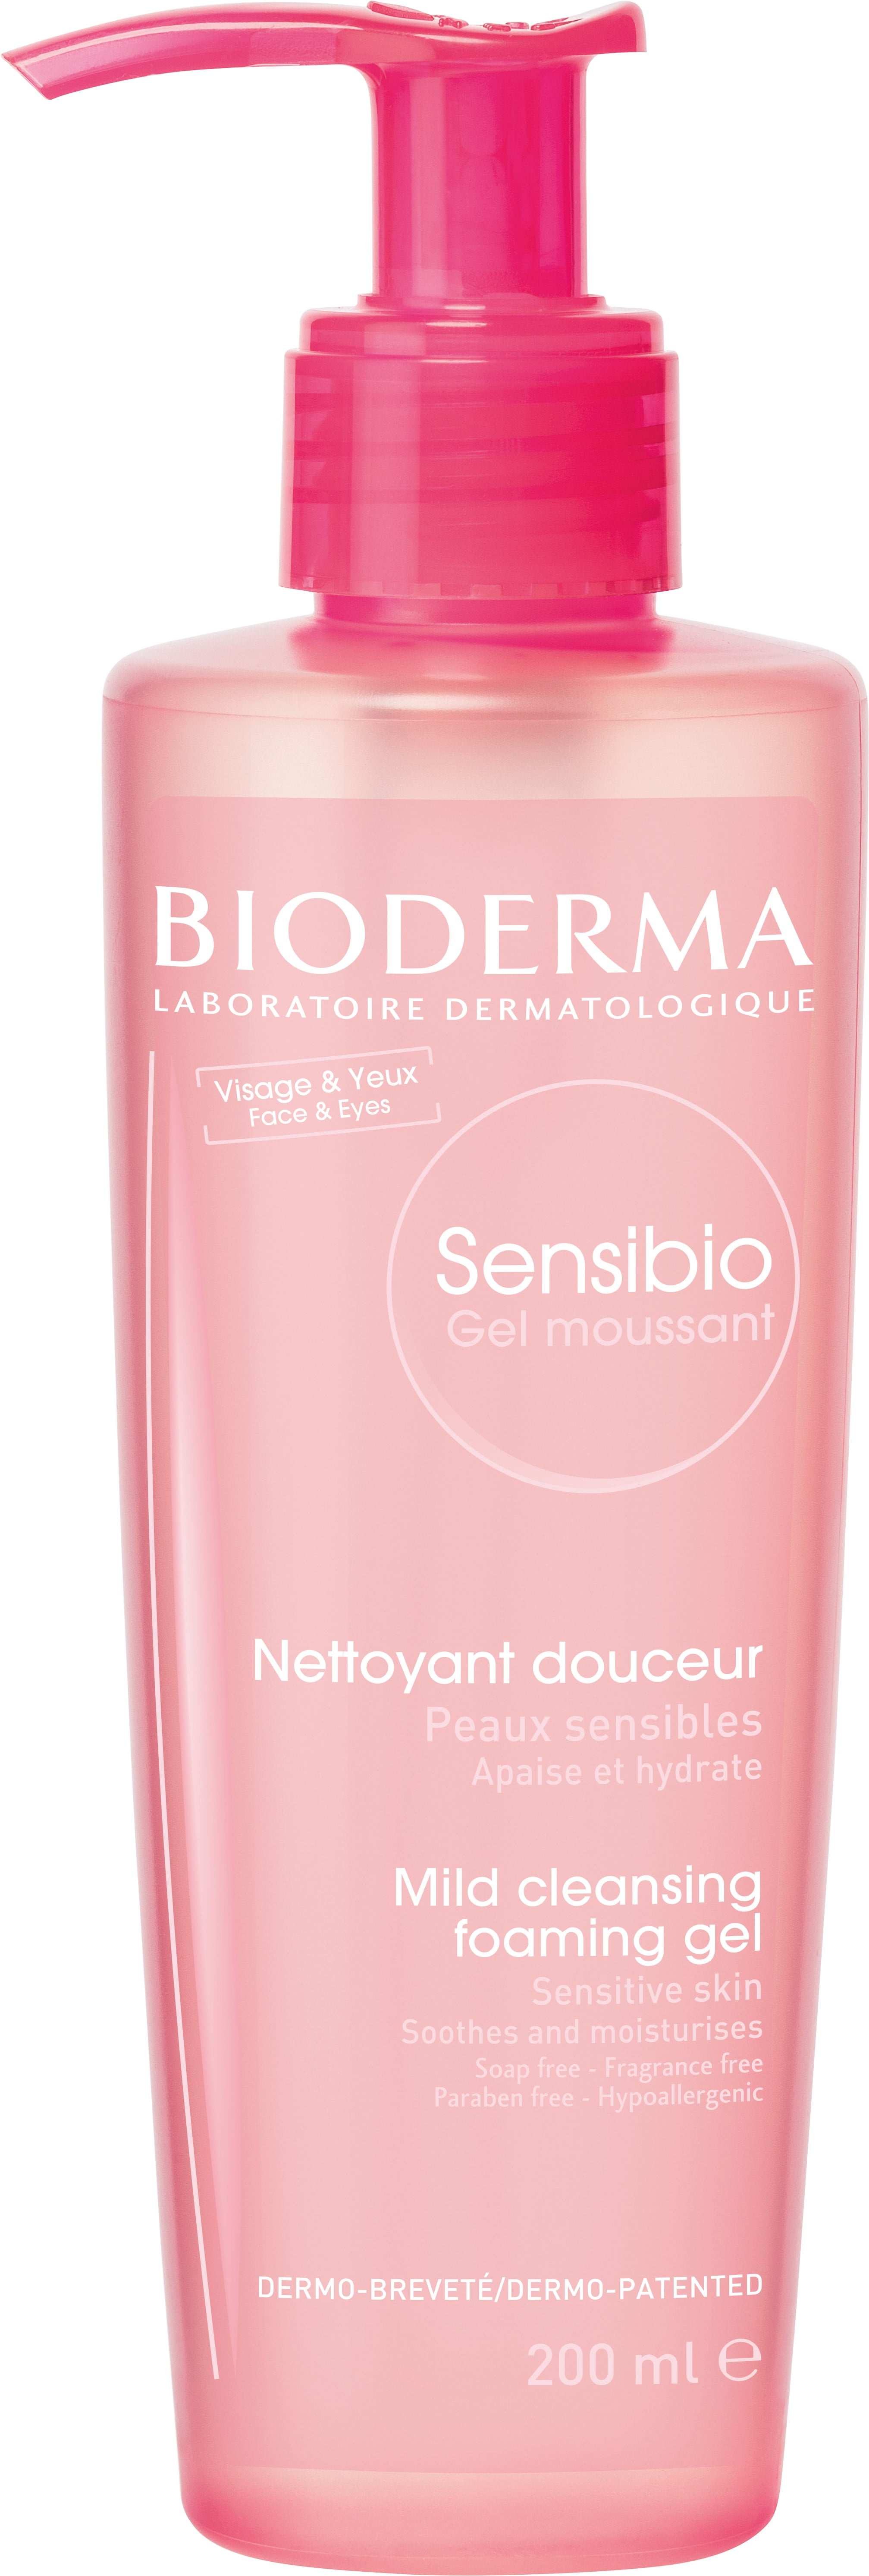 Bioderma USA  Bioderma Products - MA French Beauty